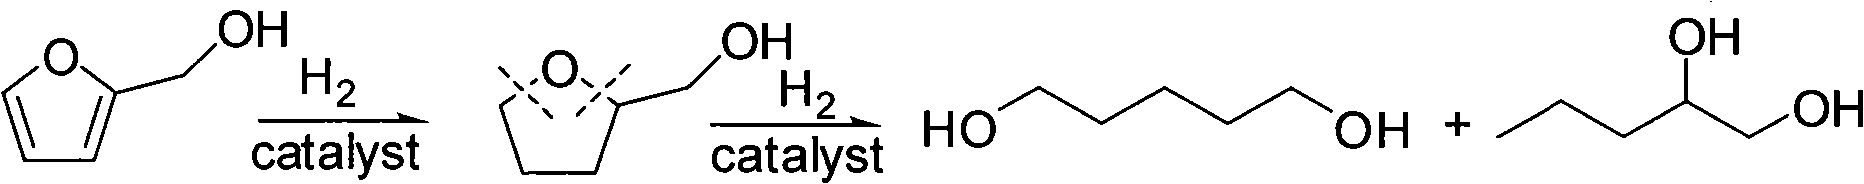 New loop opening hydrogenation reaction method for furan derivant